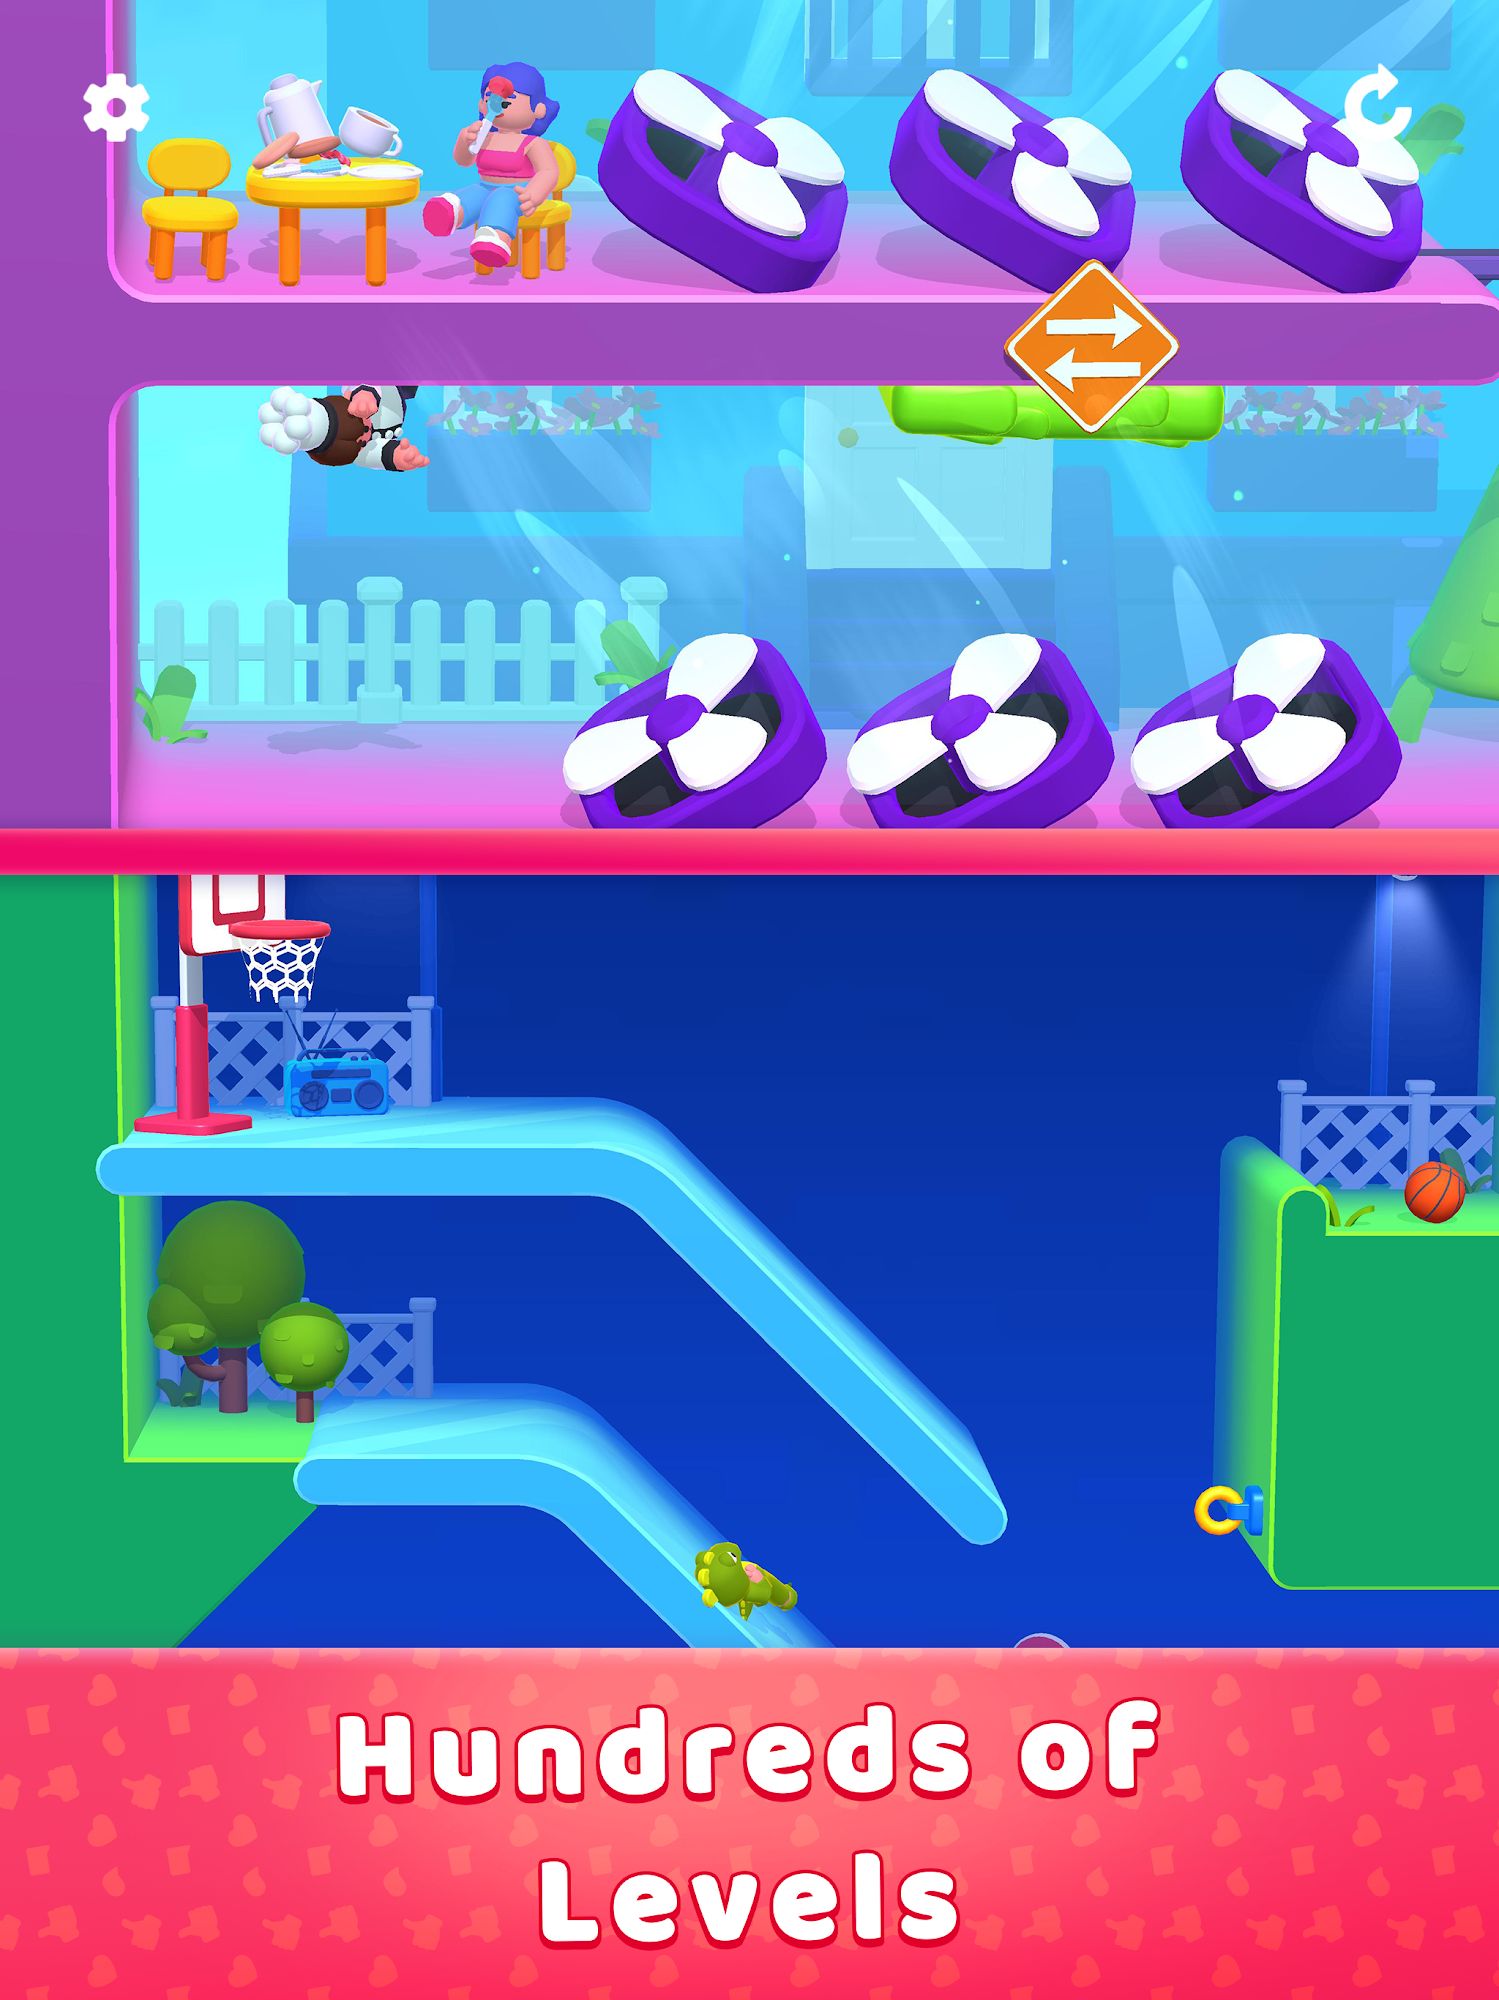 Lazy Jump - Android game screenshots.